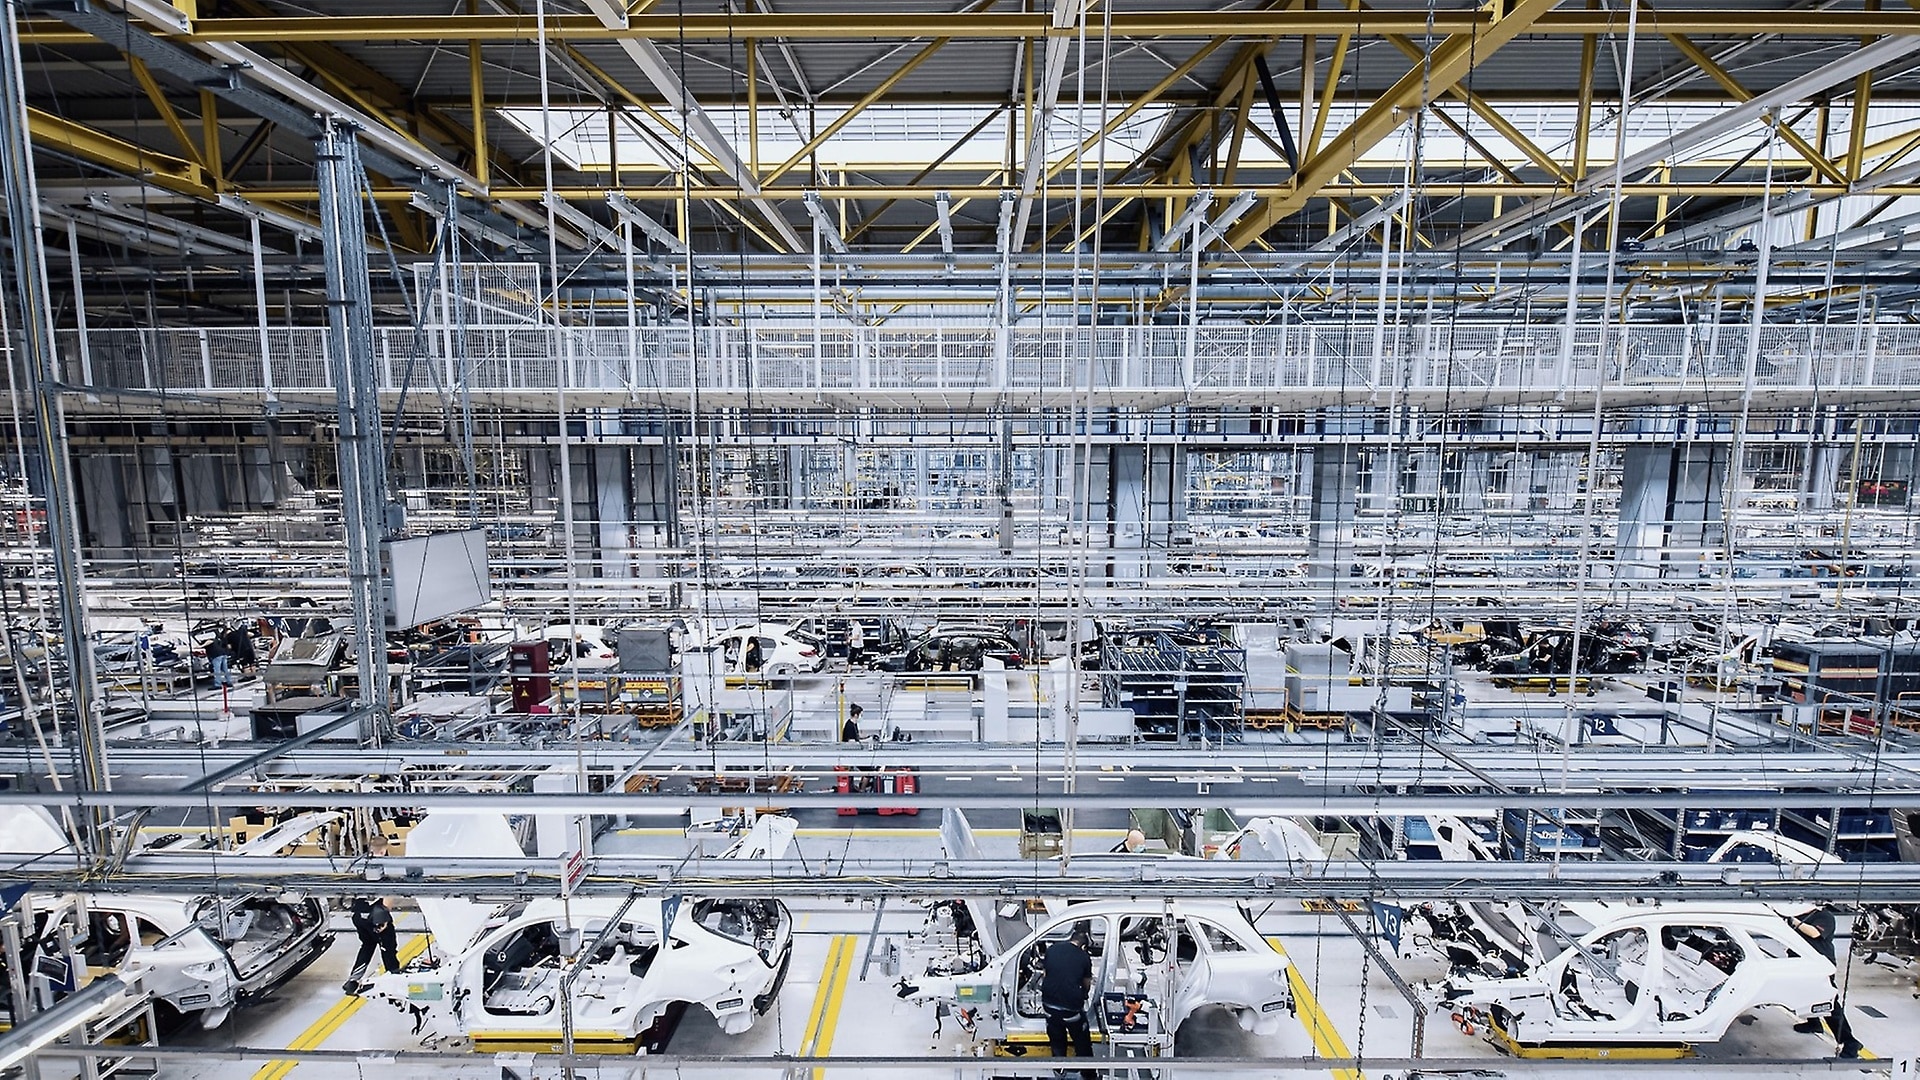 A glimpse into production at the Mercedes-Benz plant Bremen.